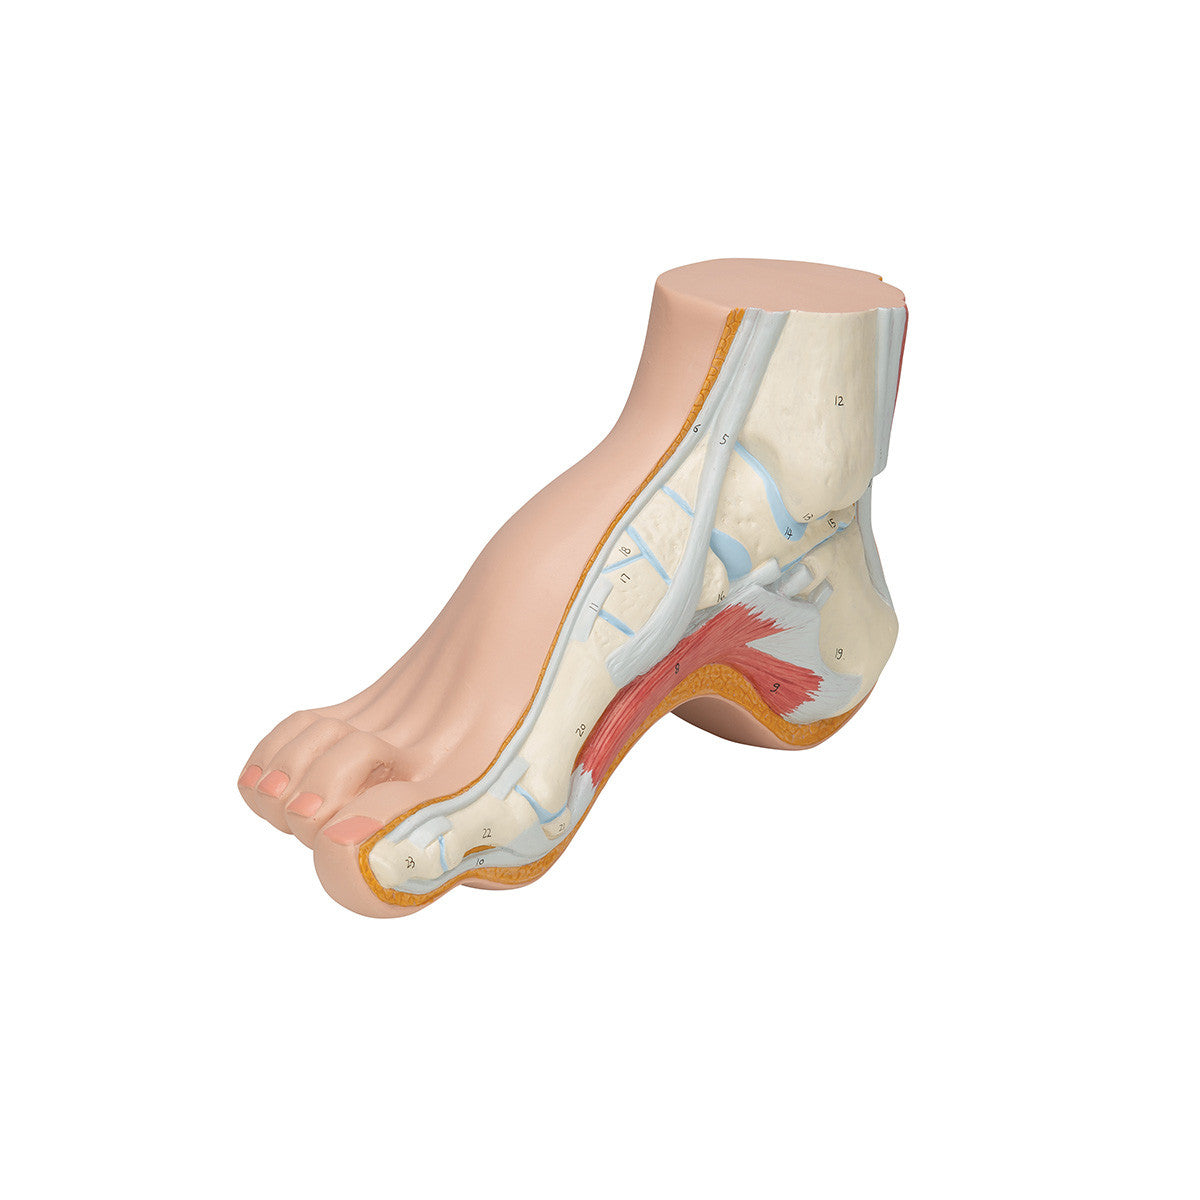 Arched Foot | 3B Scientific M32